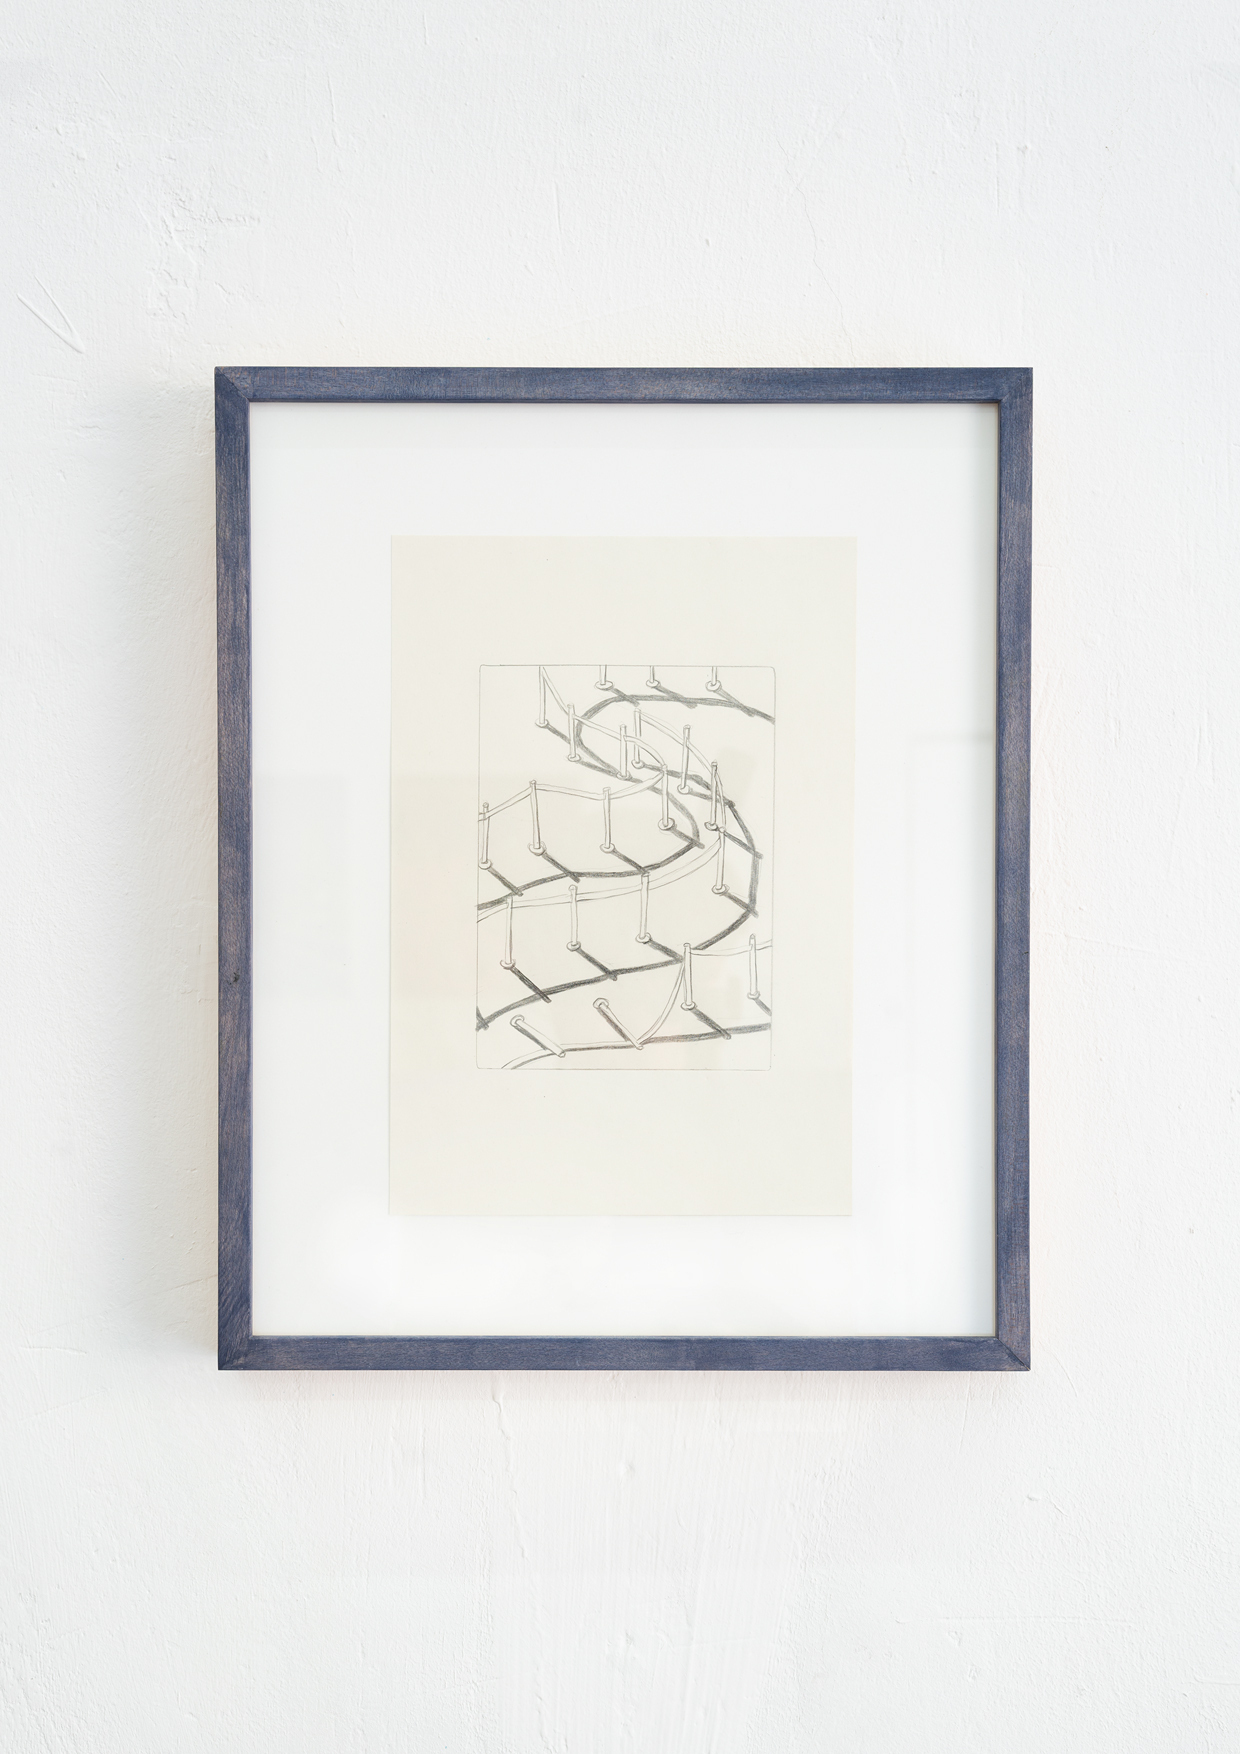 Antonia Rodrian, "Distanz", 2021, pencil on paper, 25 x 17 cm